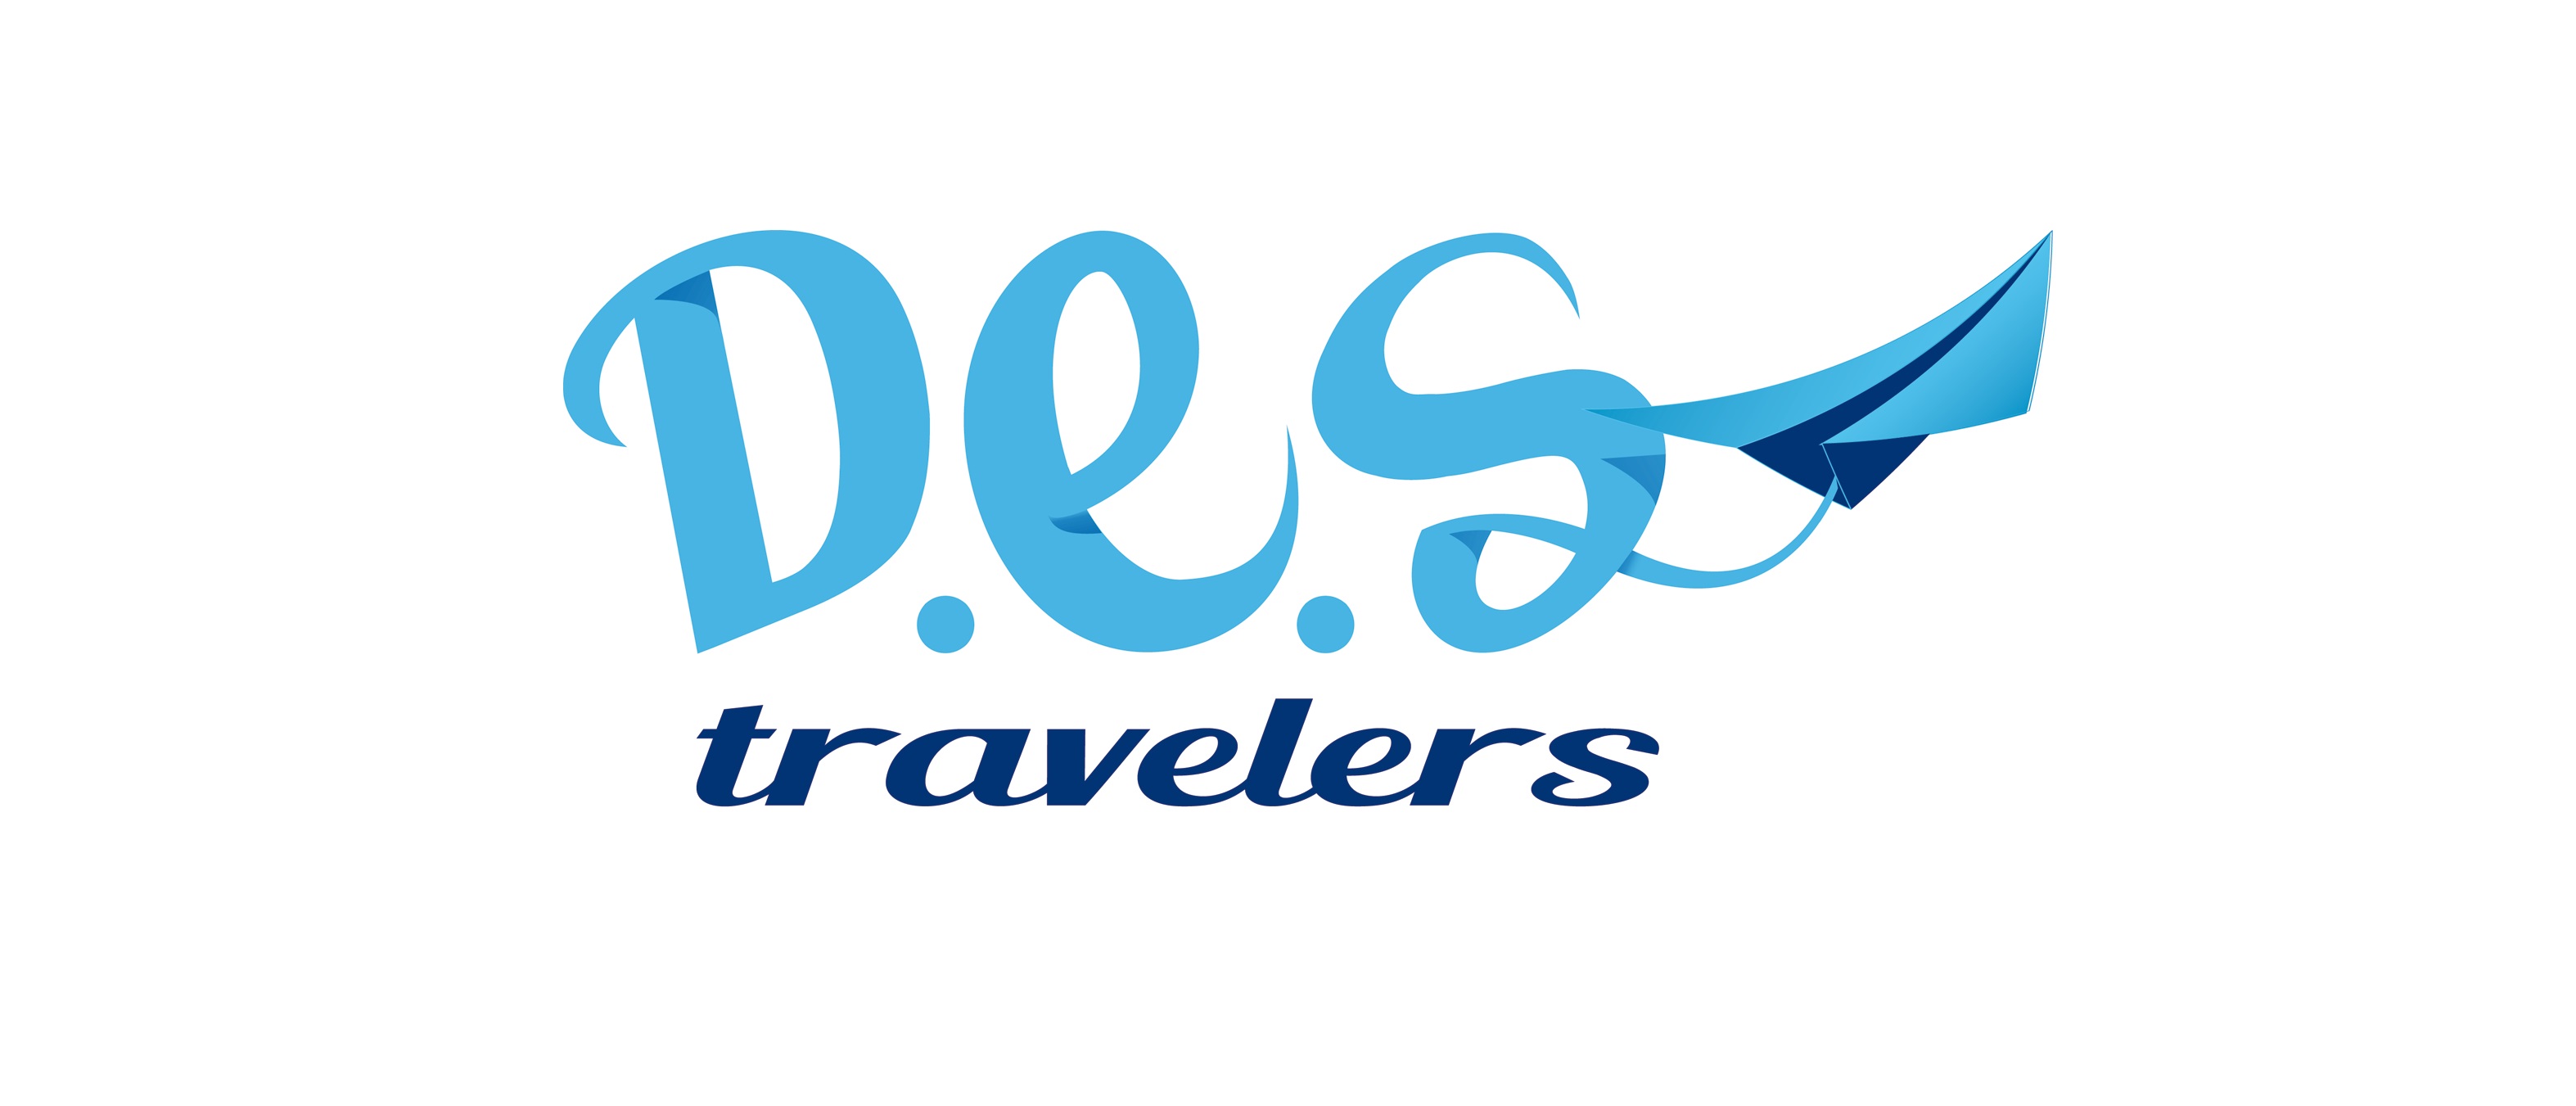 D.e.s. travelers